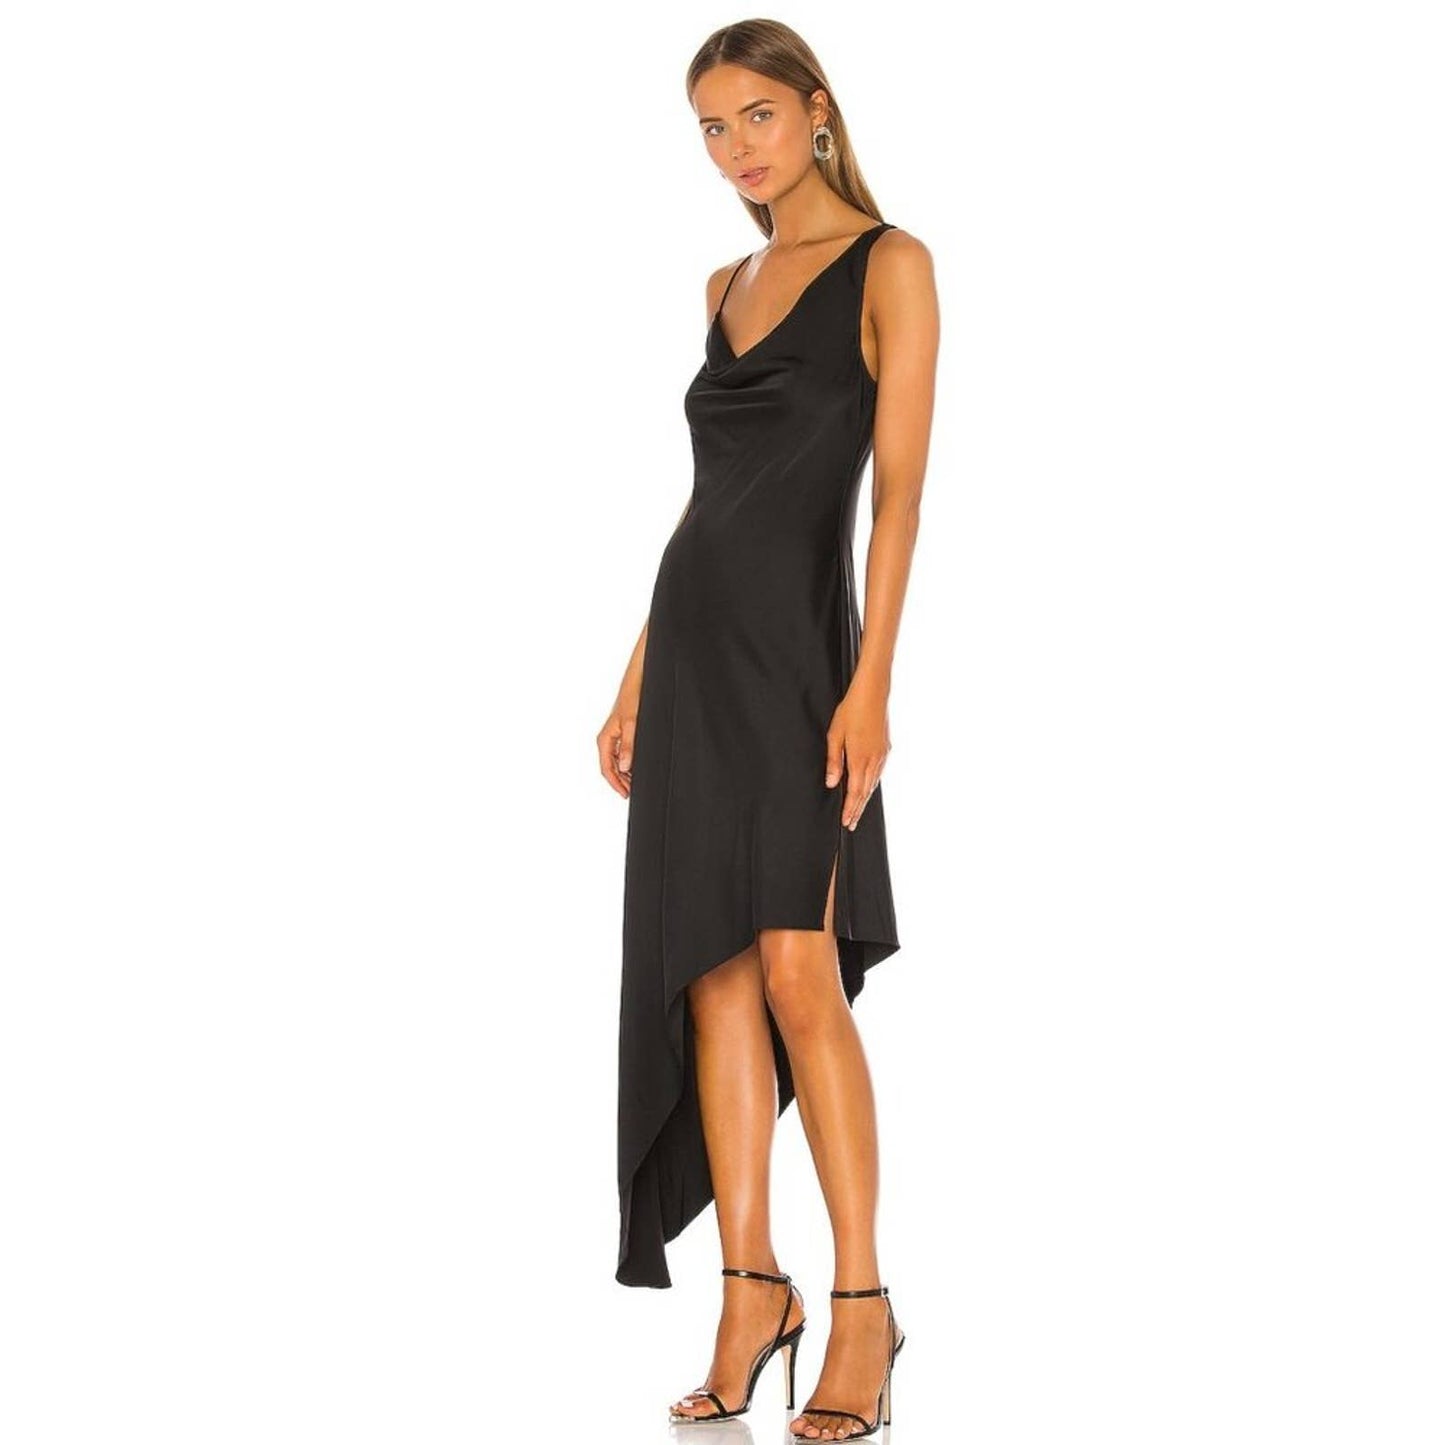 NBD Harmony Midi Dress in Black Satin NWT Size Small